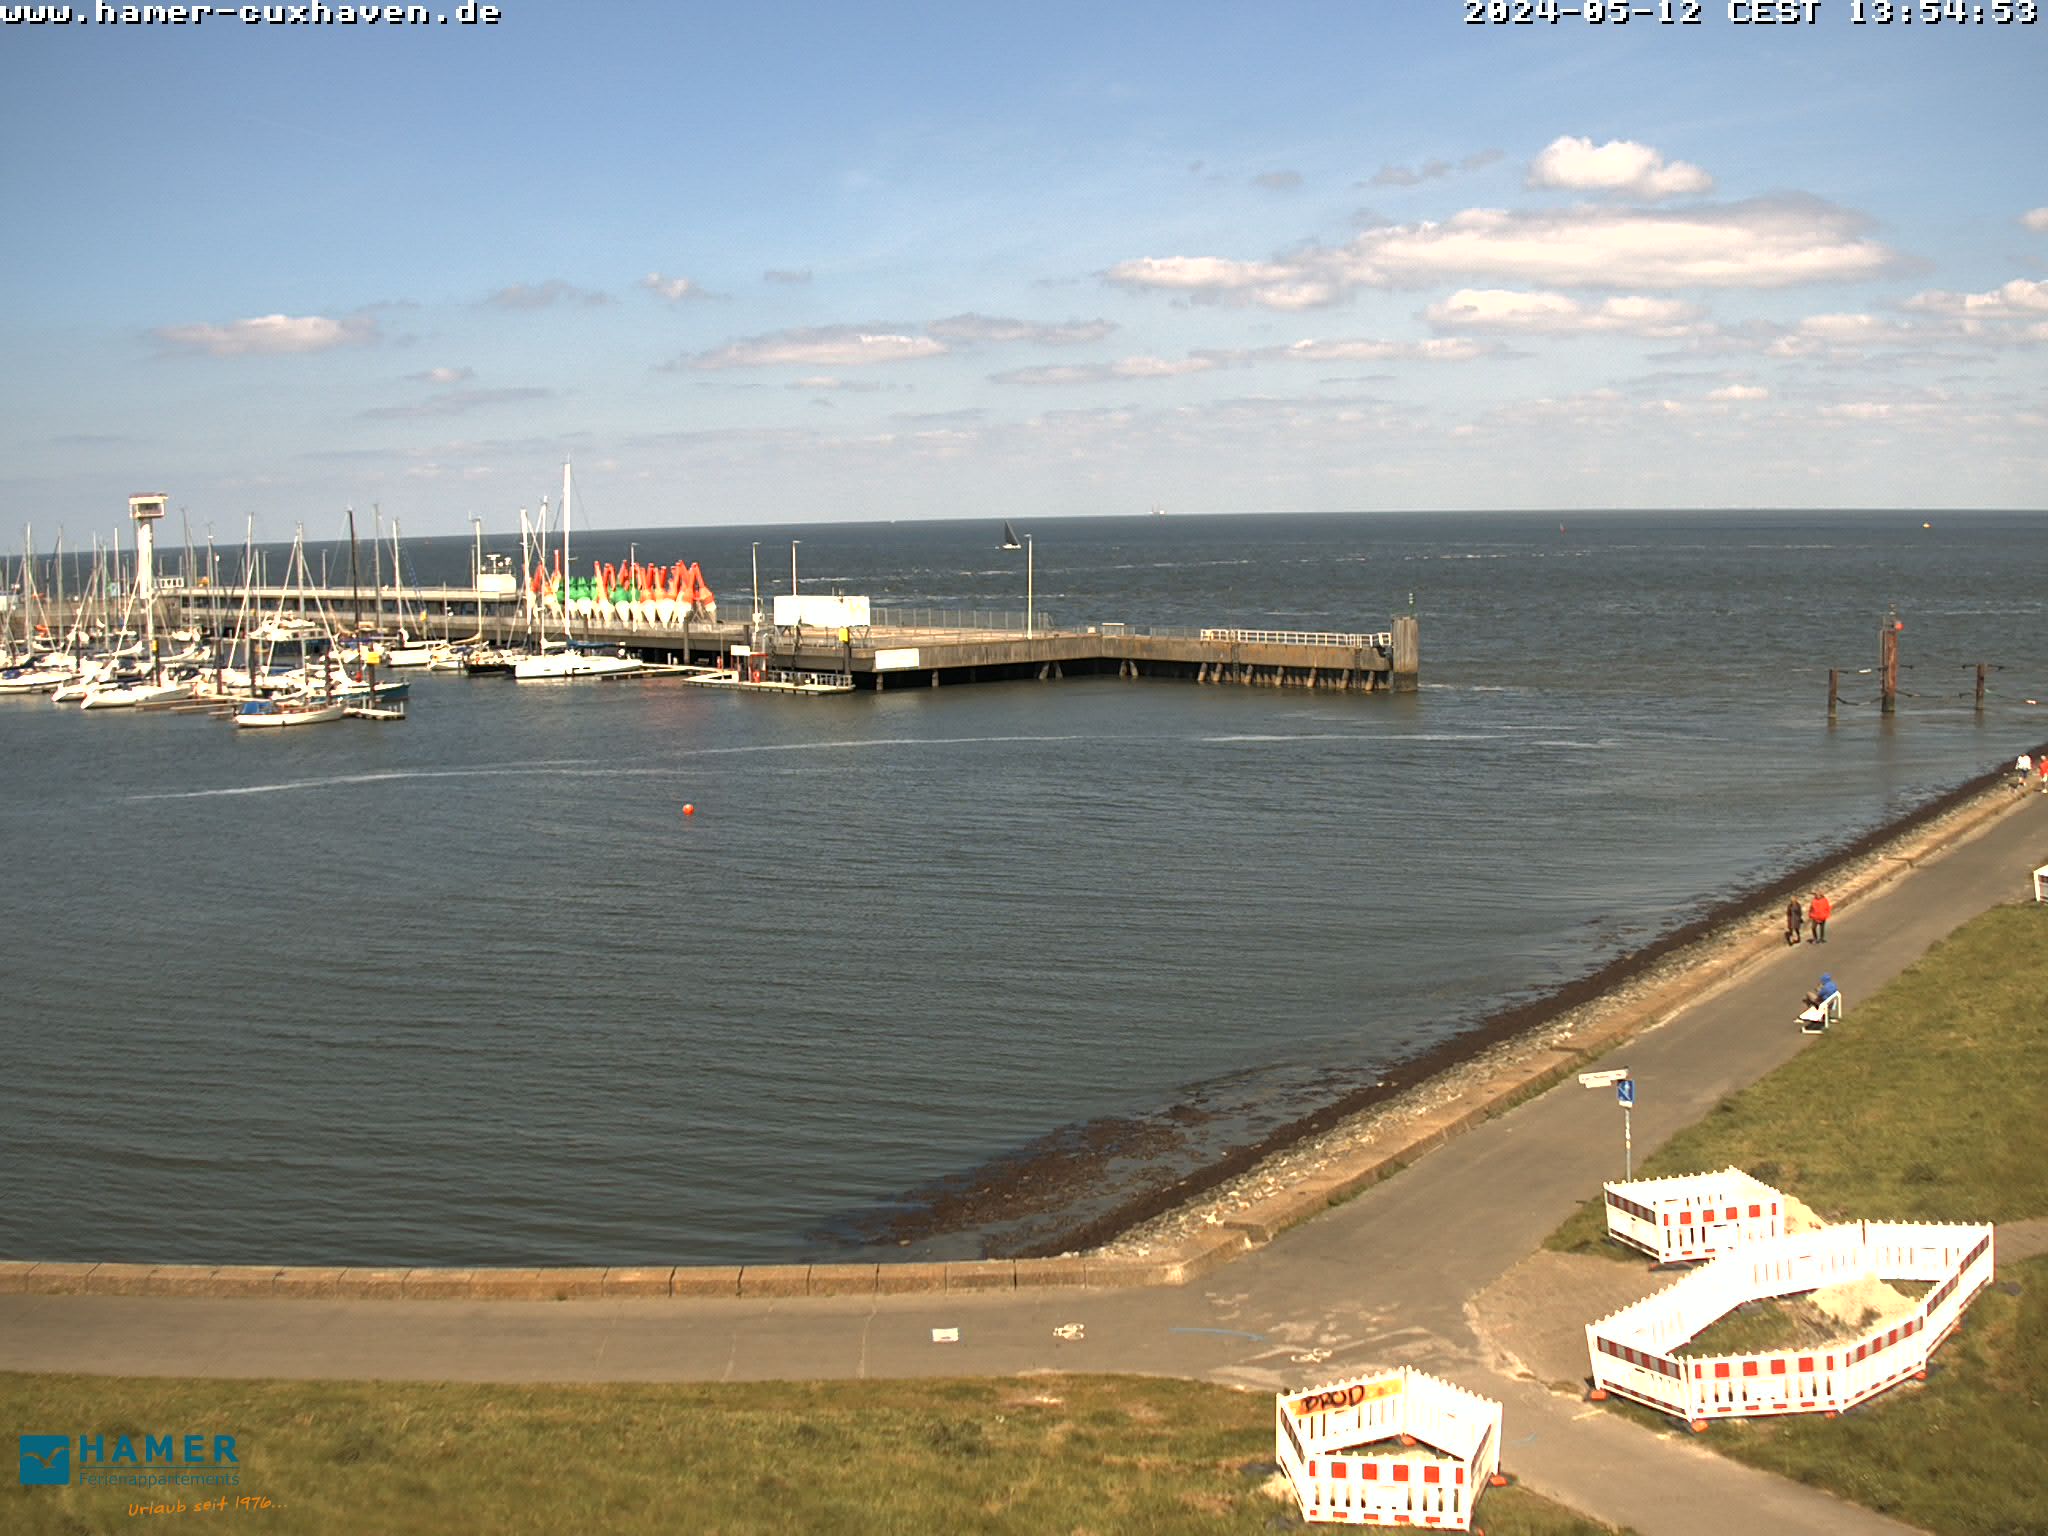 Cuxhaven Mer. 13:55